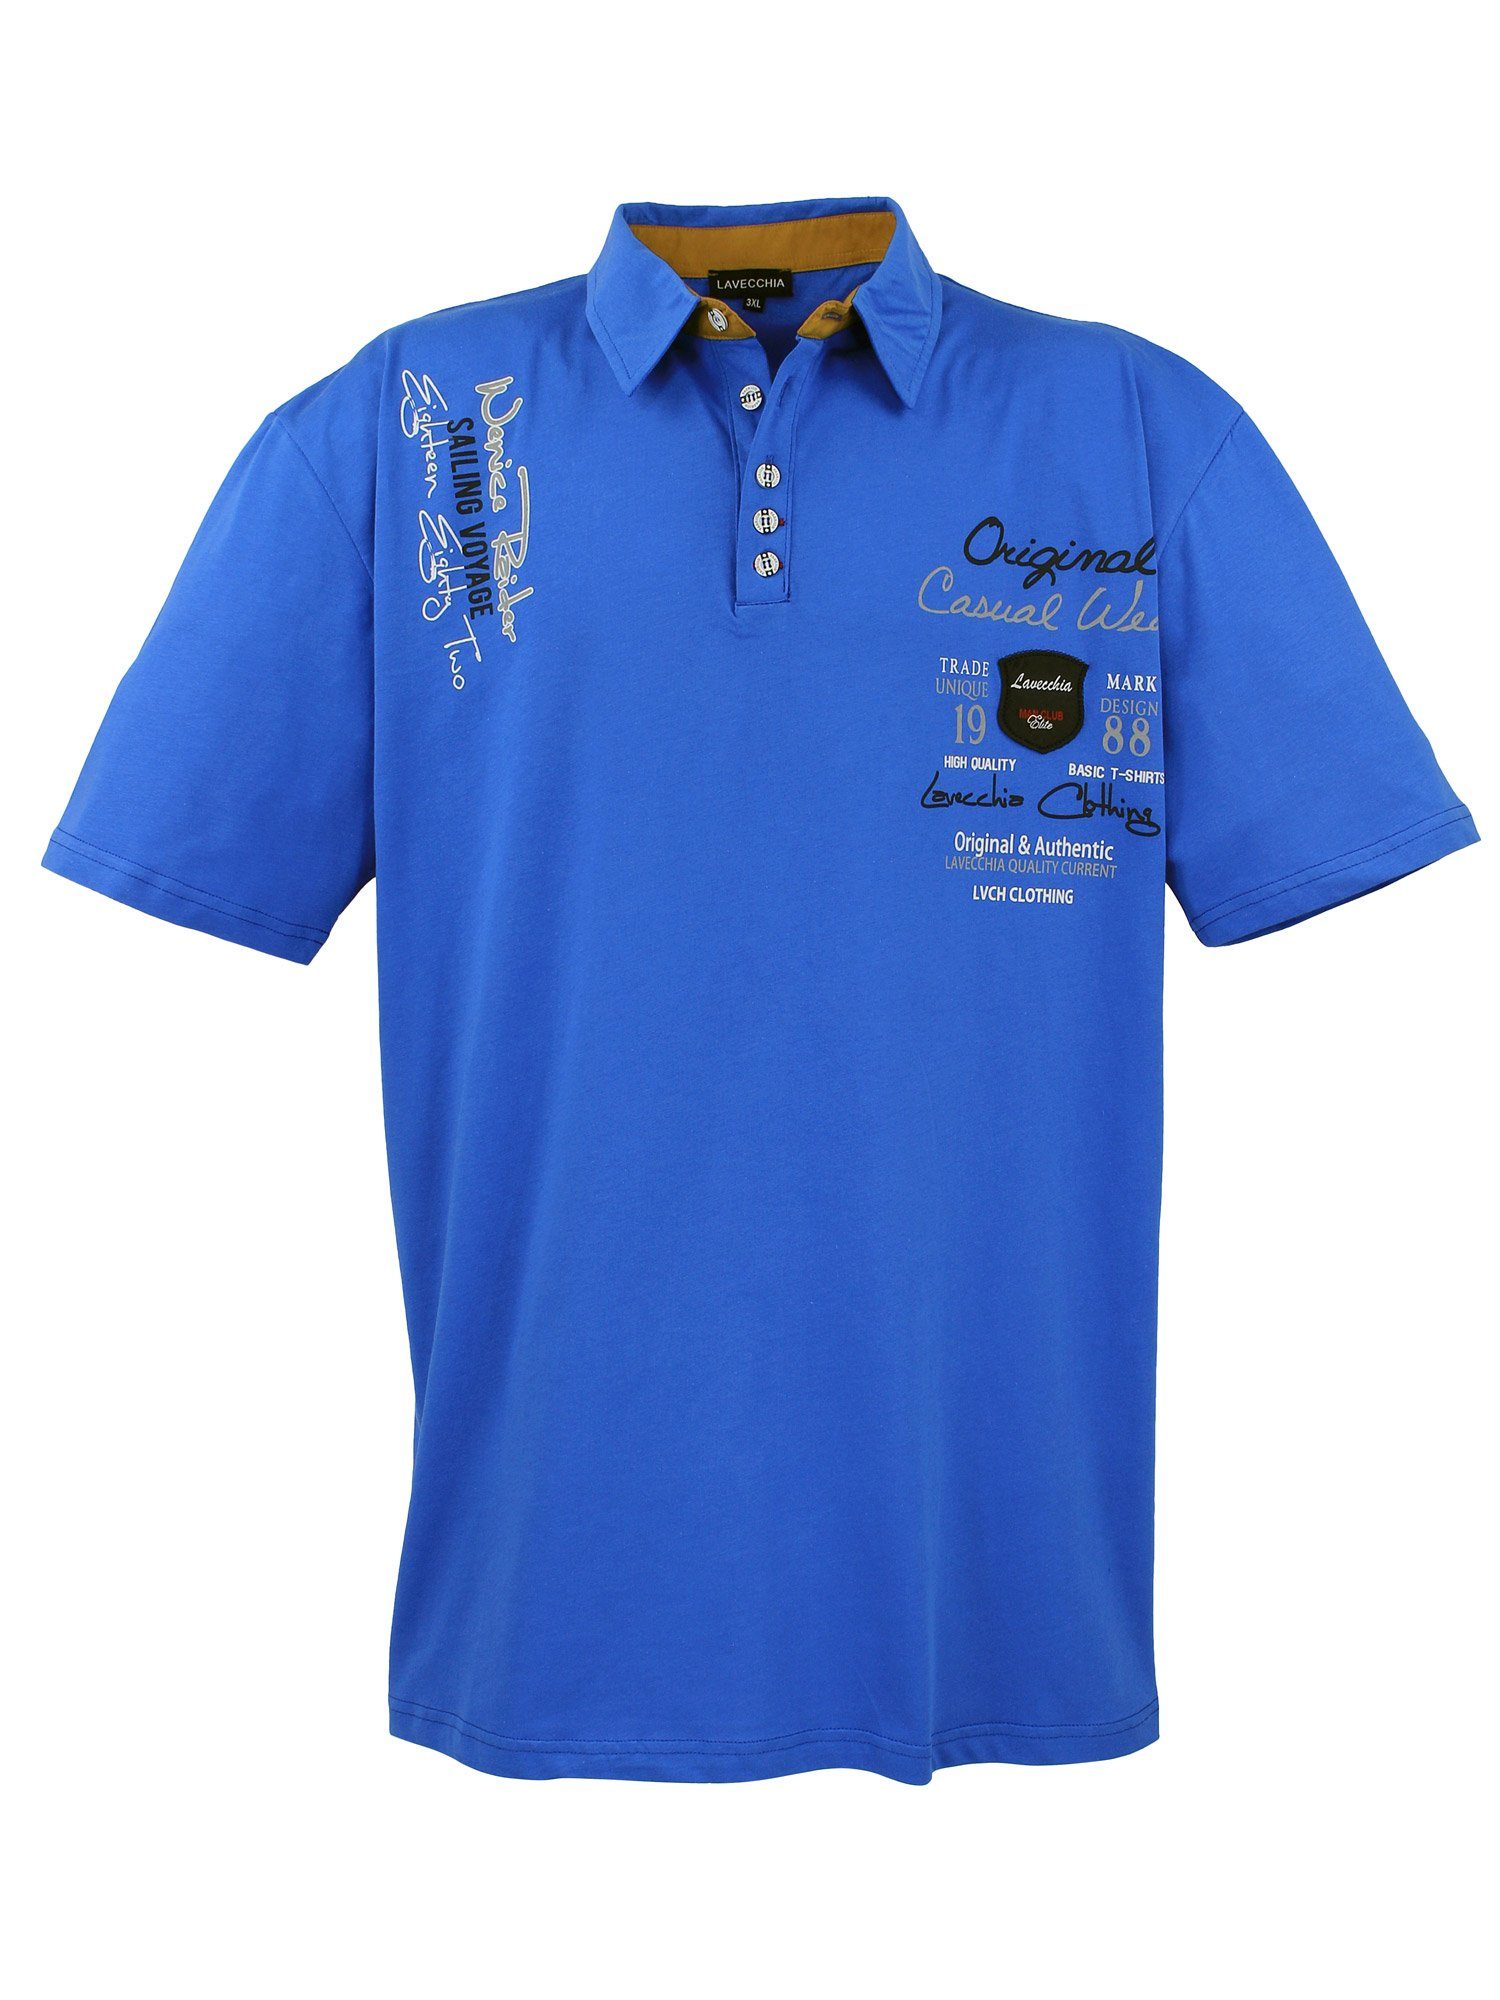 Lavecchia Poloshirt Übergrößen Herren Polo Shirt LV-610 Herren Polo Shirt royalblau